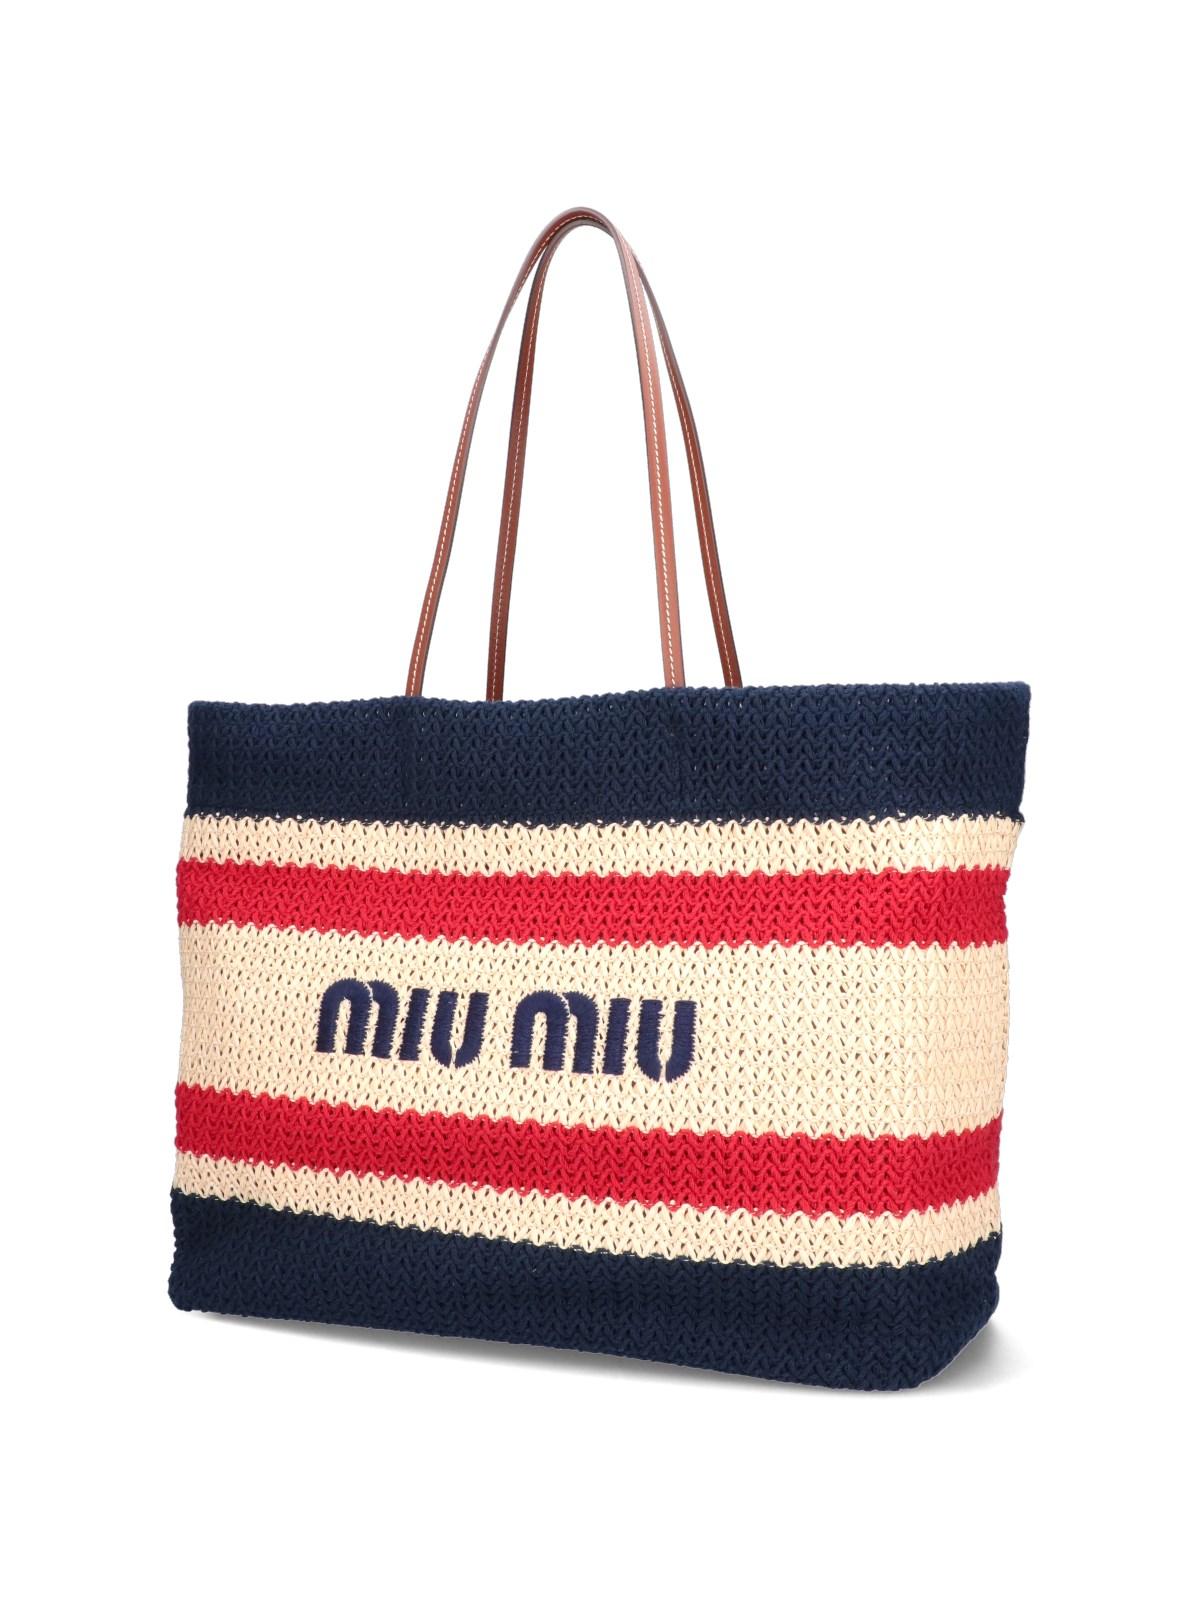 Miu Miu Shopping Bag in Red